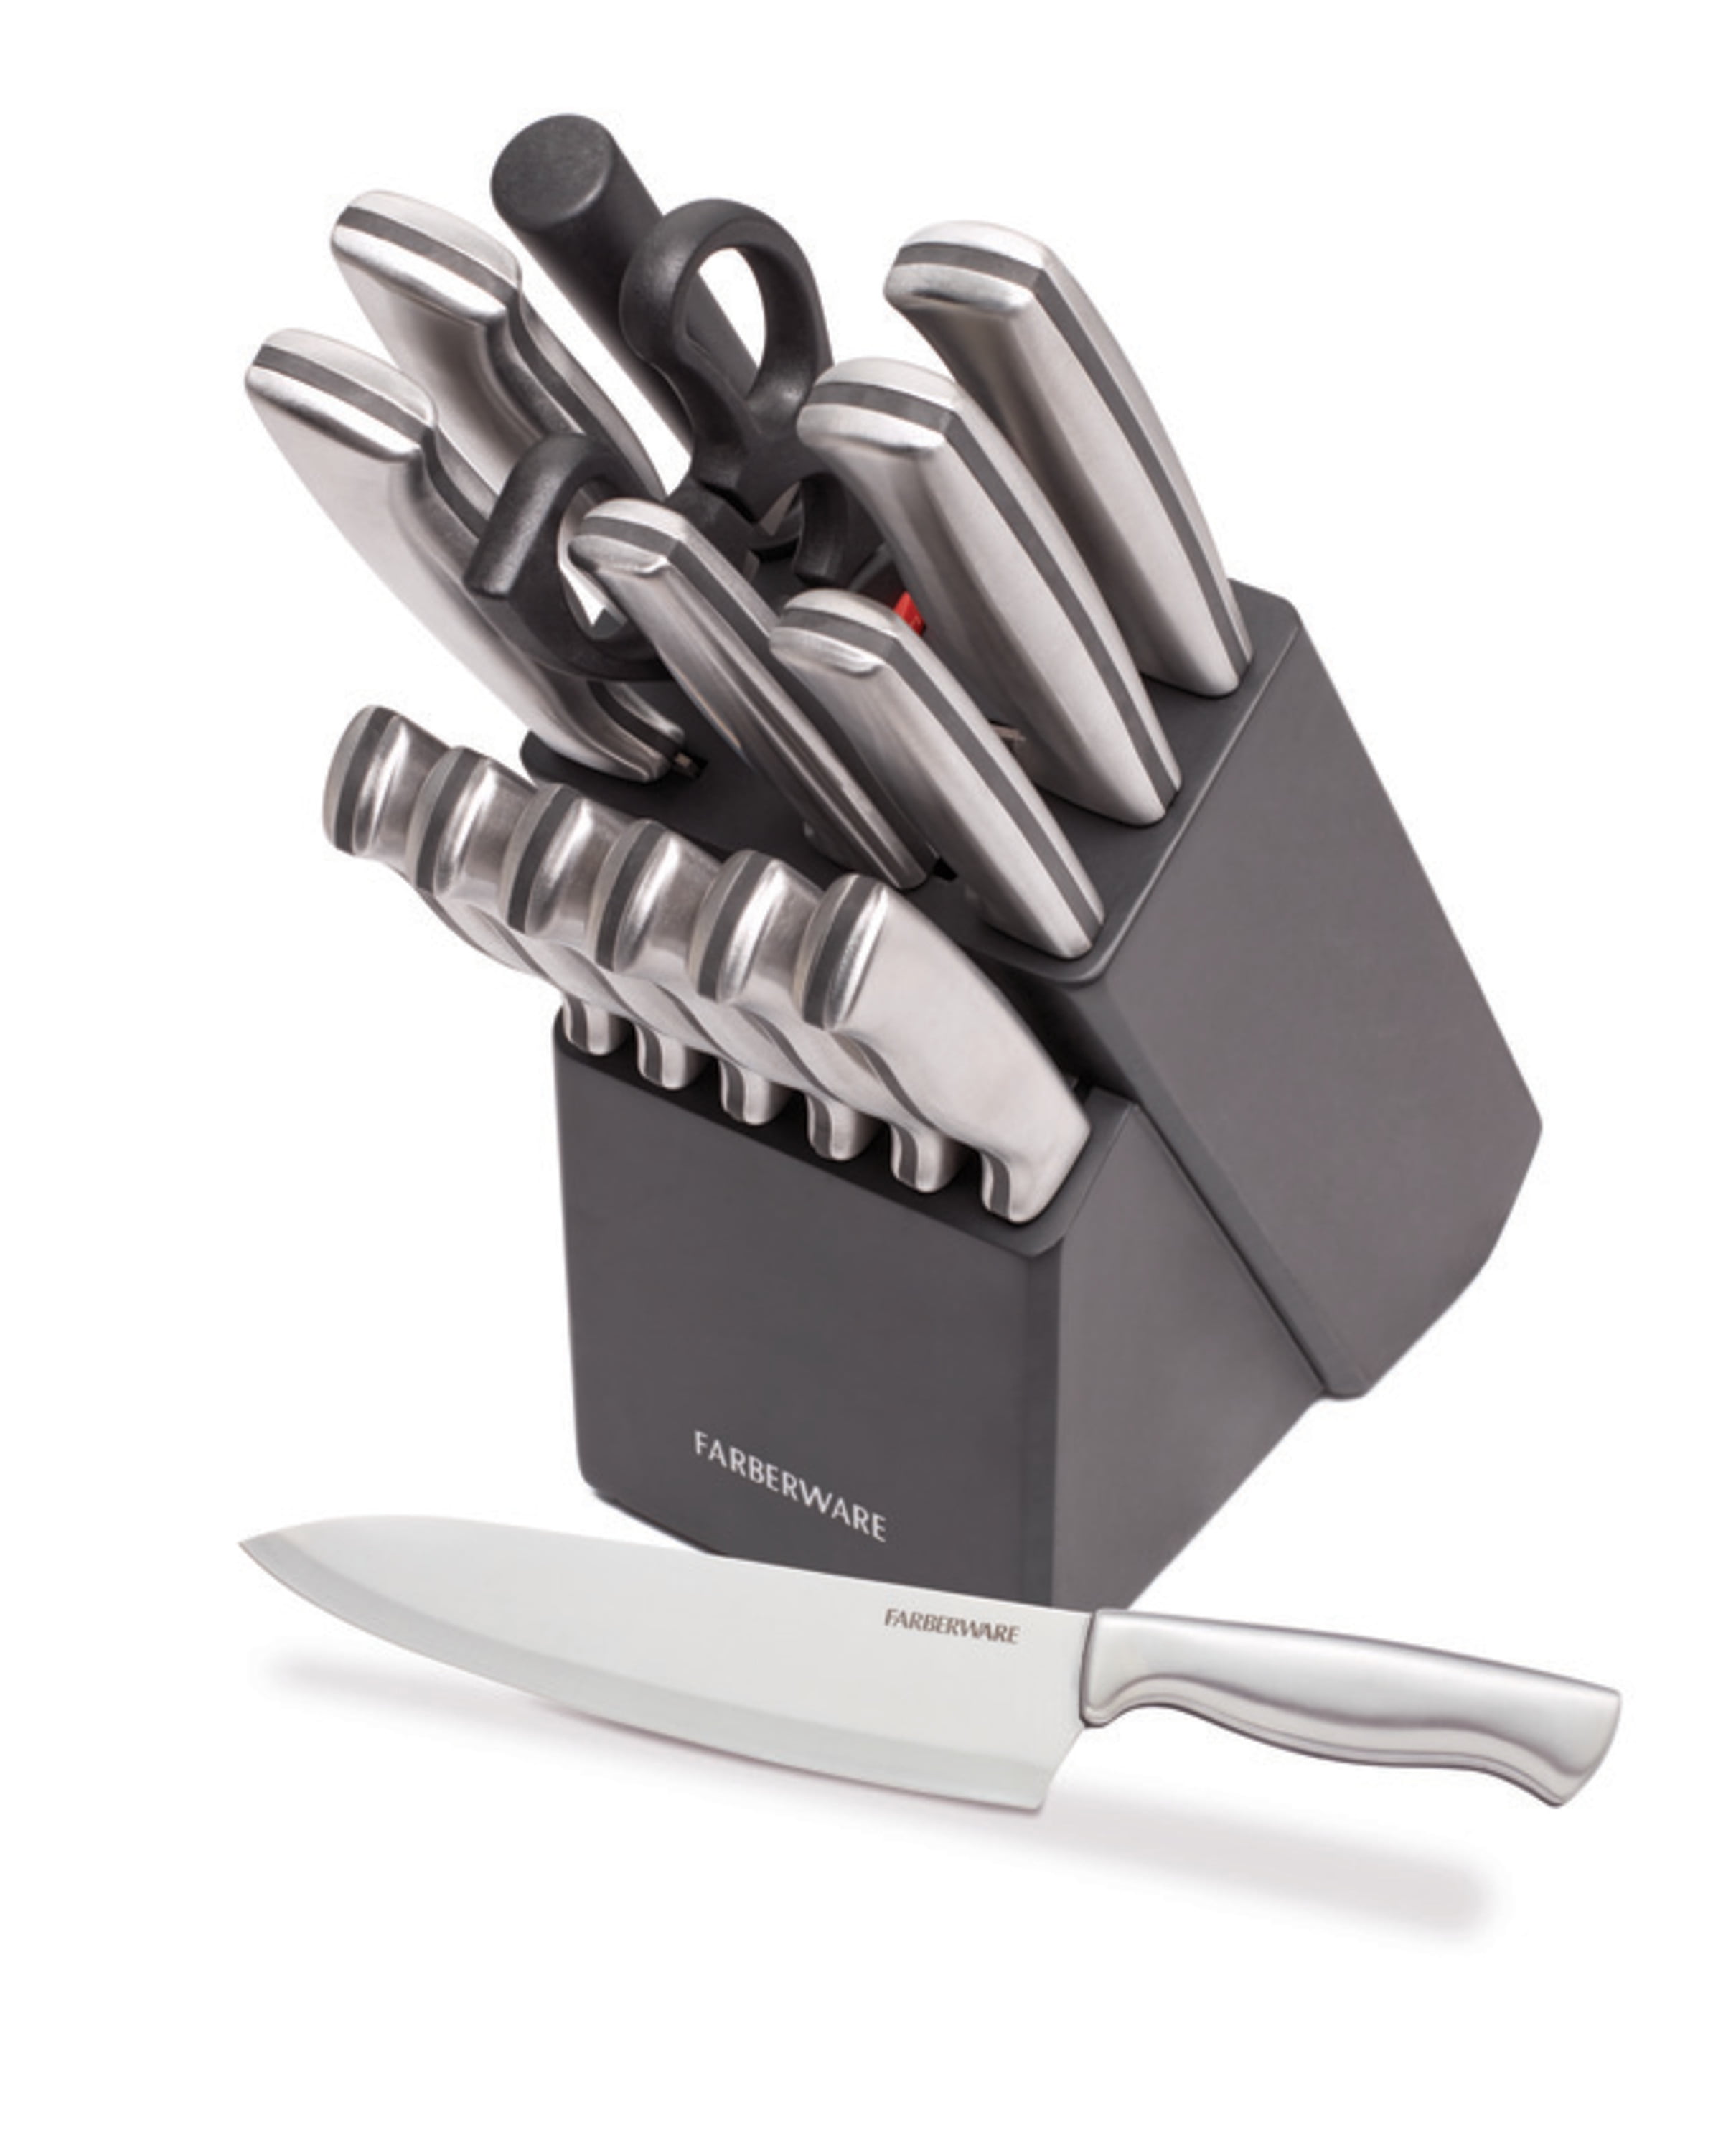 Farberware G10006 15-Piece White Handle Cutlery Block Set